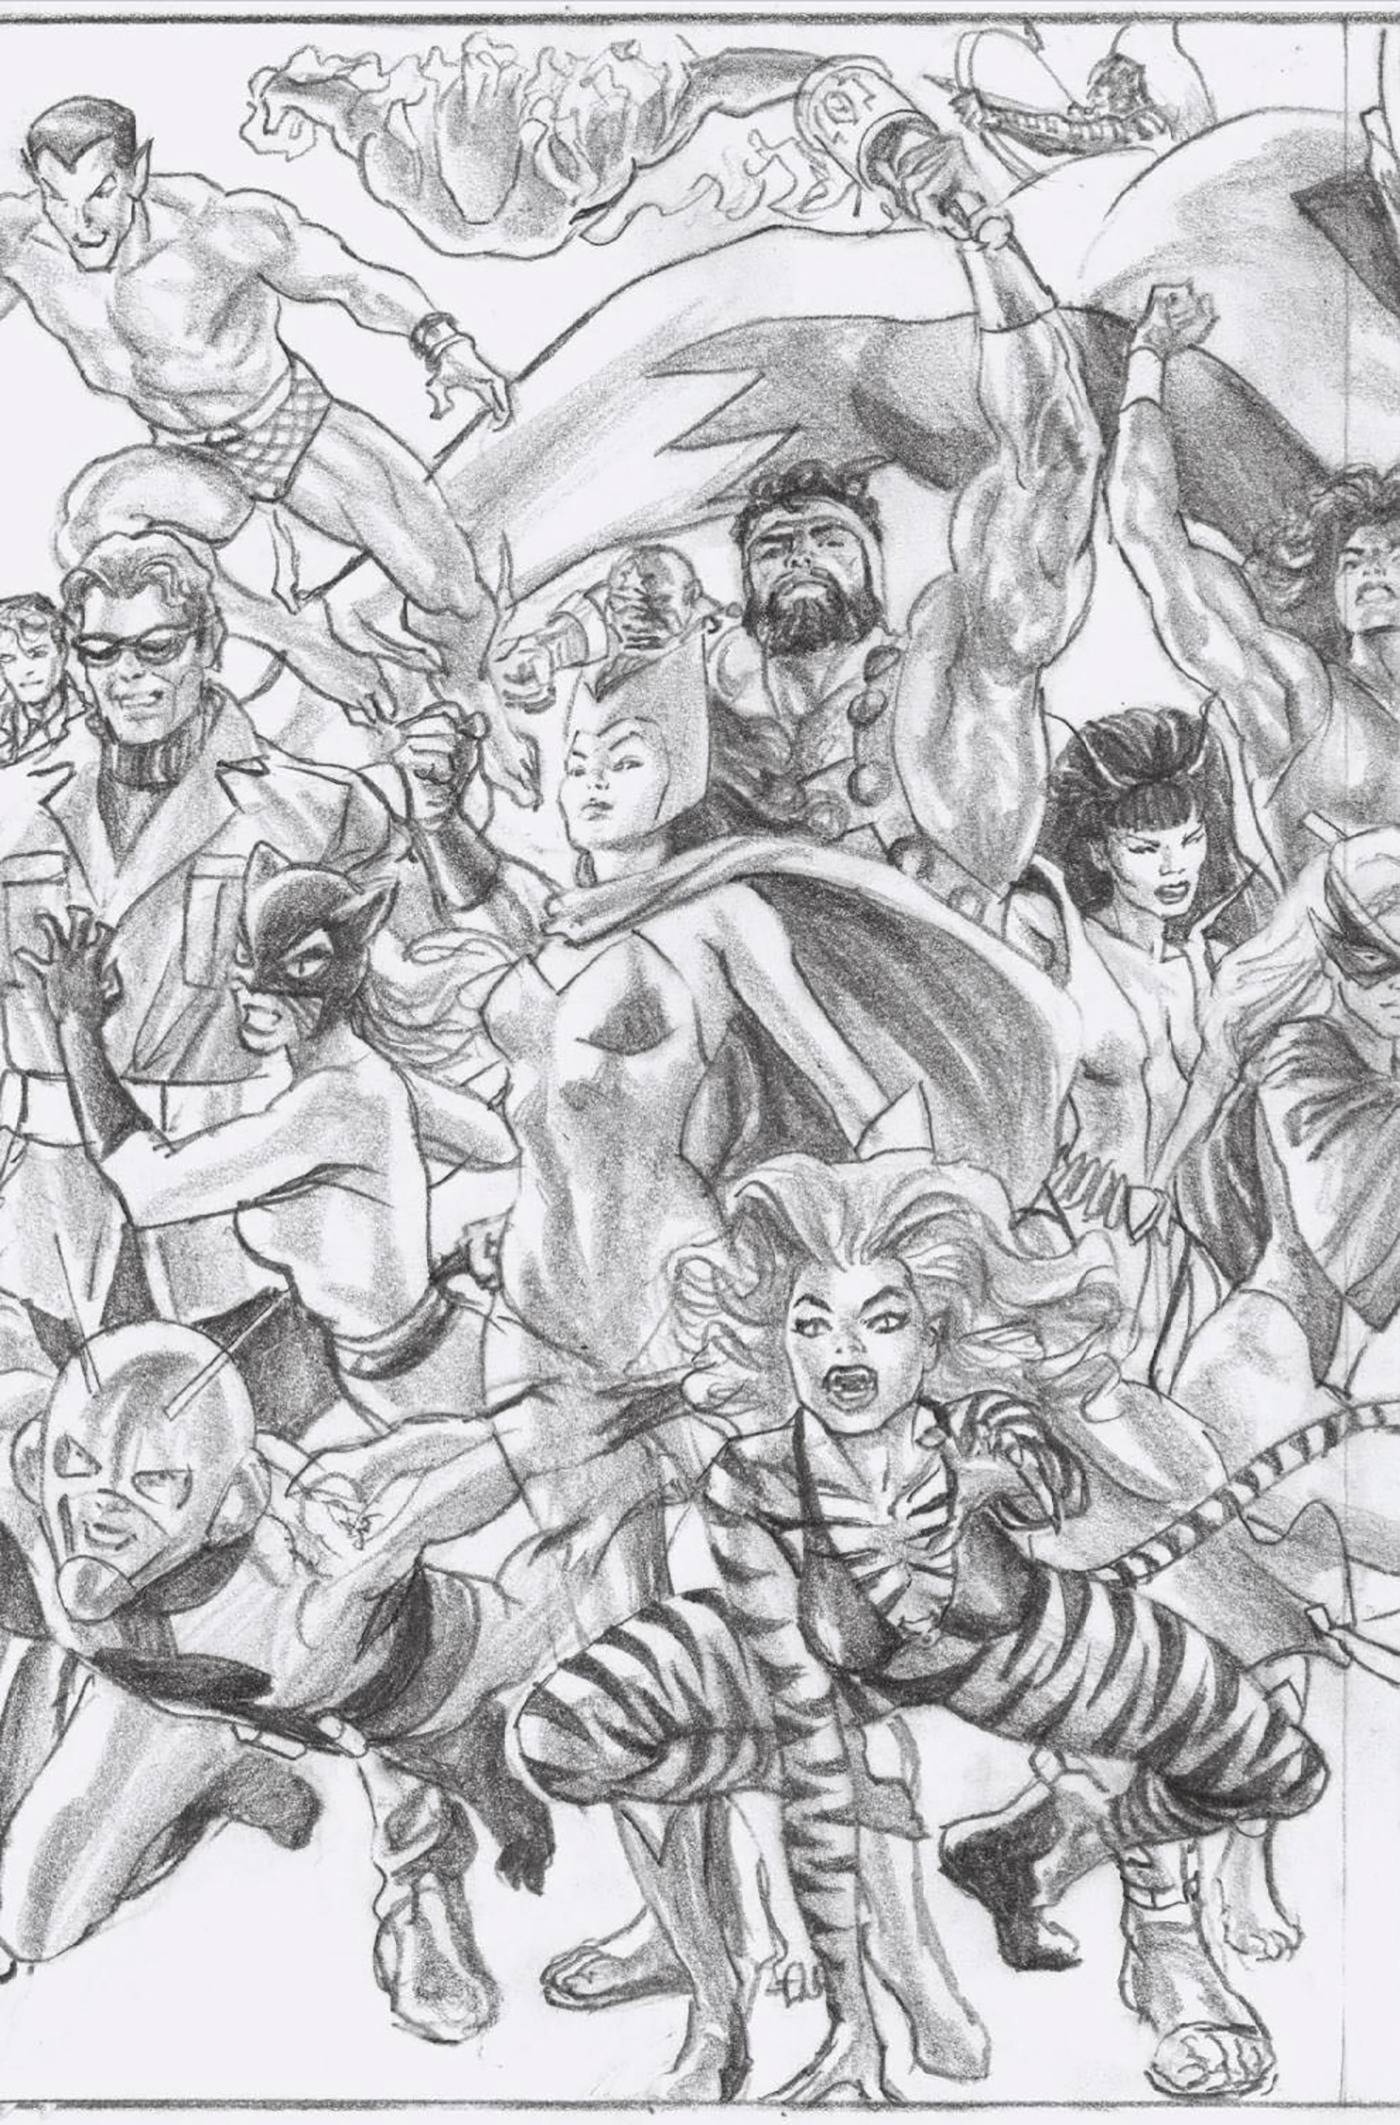 Digital Art » Avengers In Ink on Behance